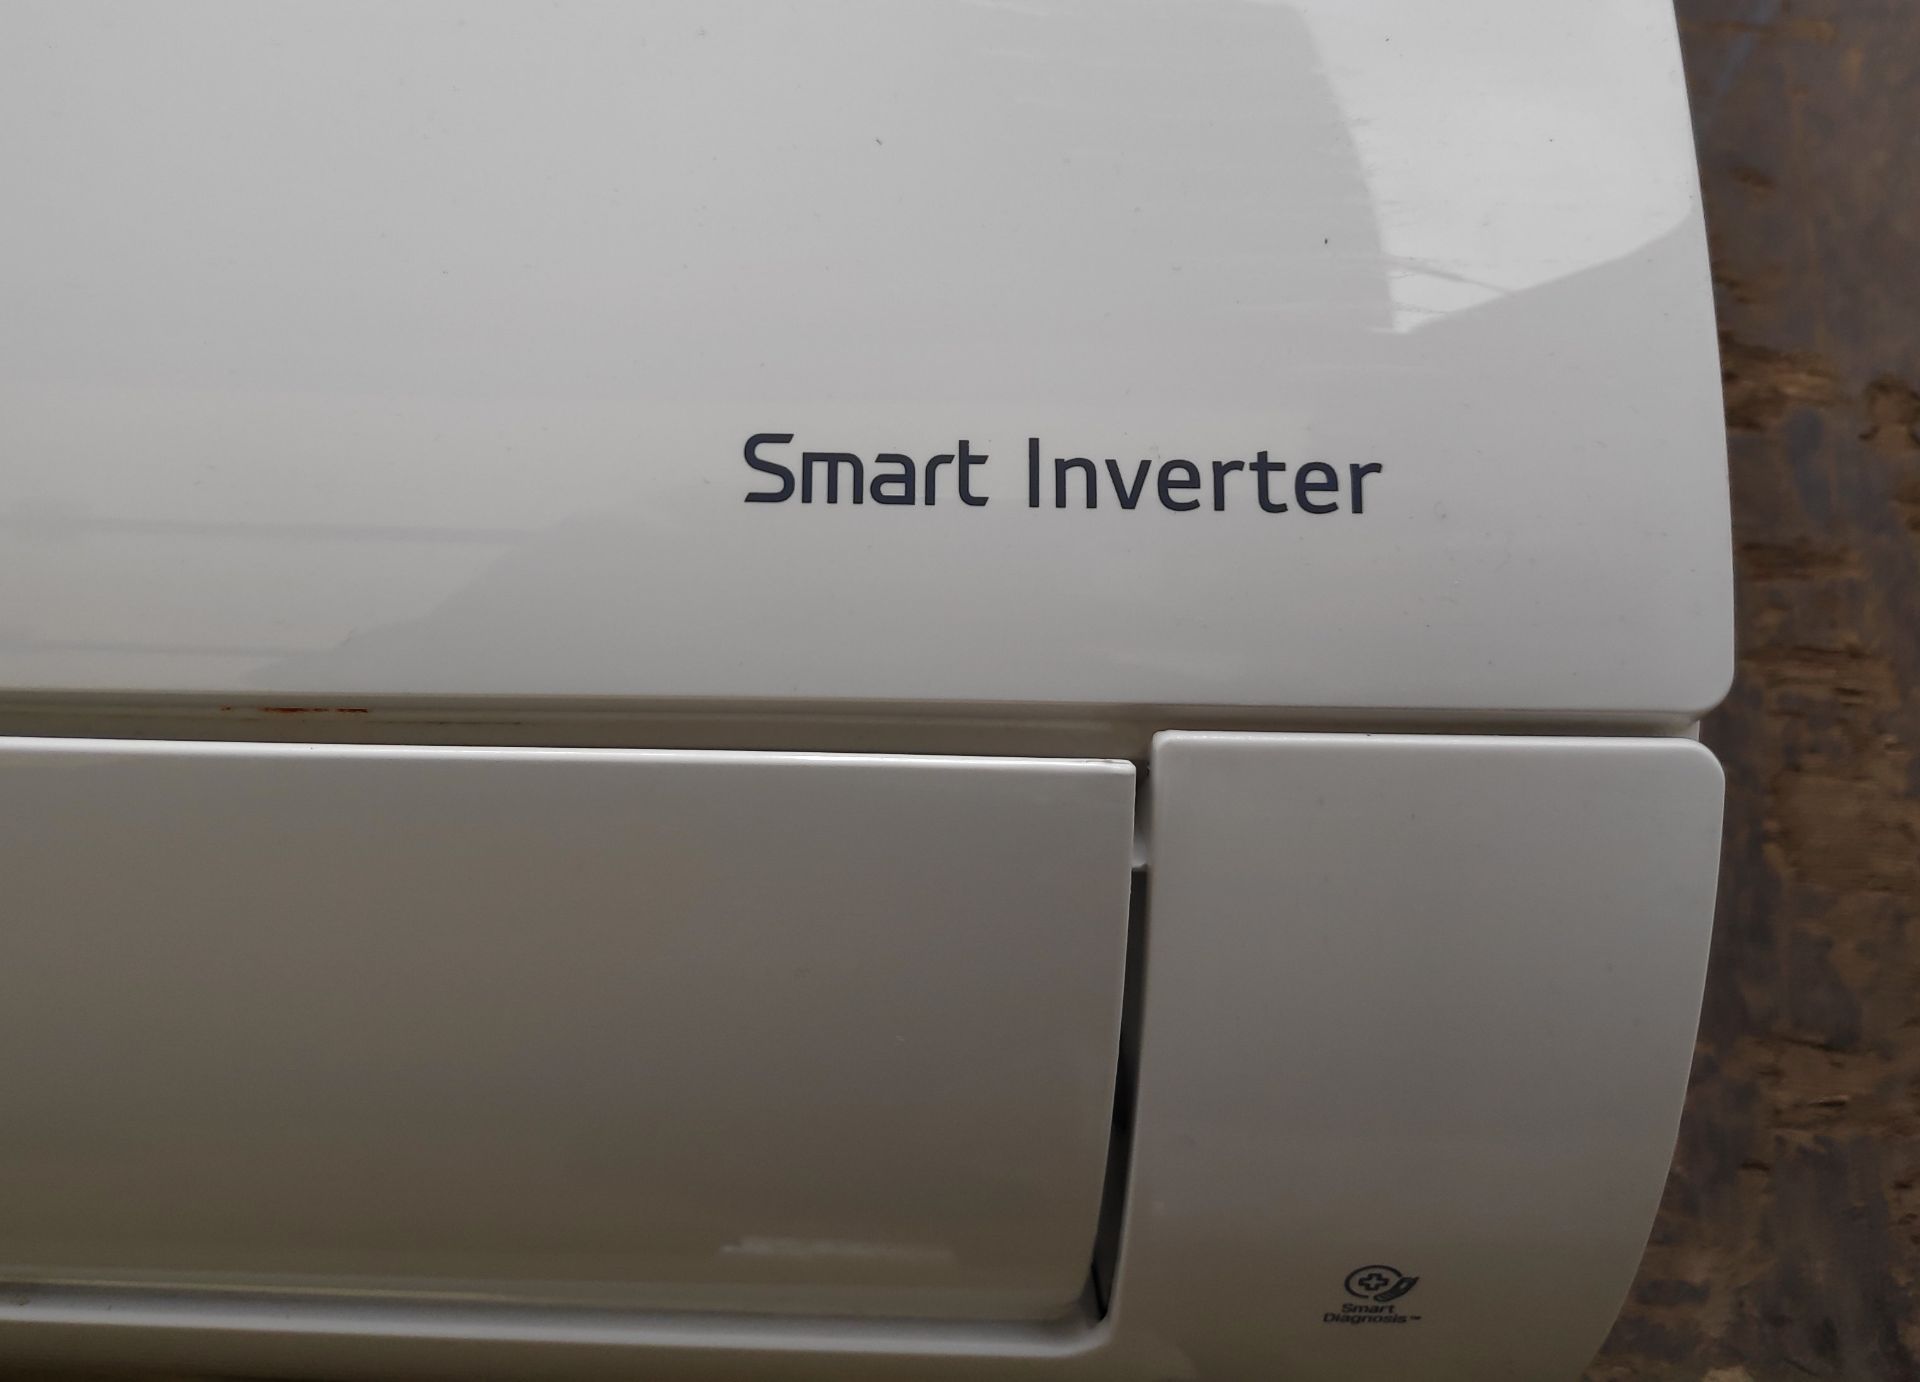 1 x LG Wall Mounted Air Conditioner Smart Inverter Indoor Unit - Model P18EN.NSK - JMCS116 - - Image 9 of 10